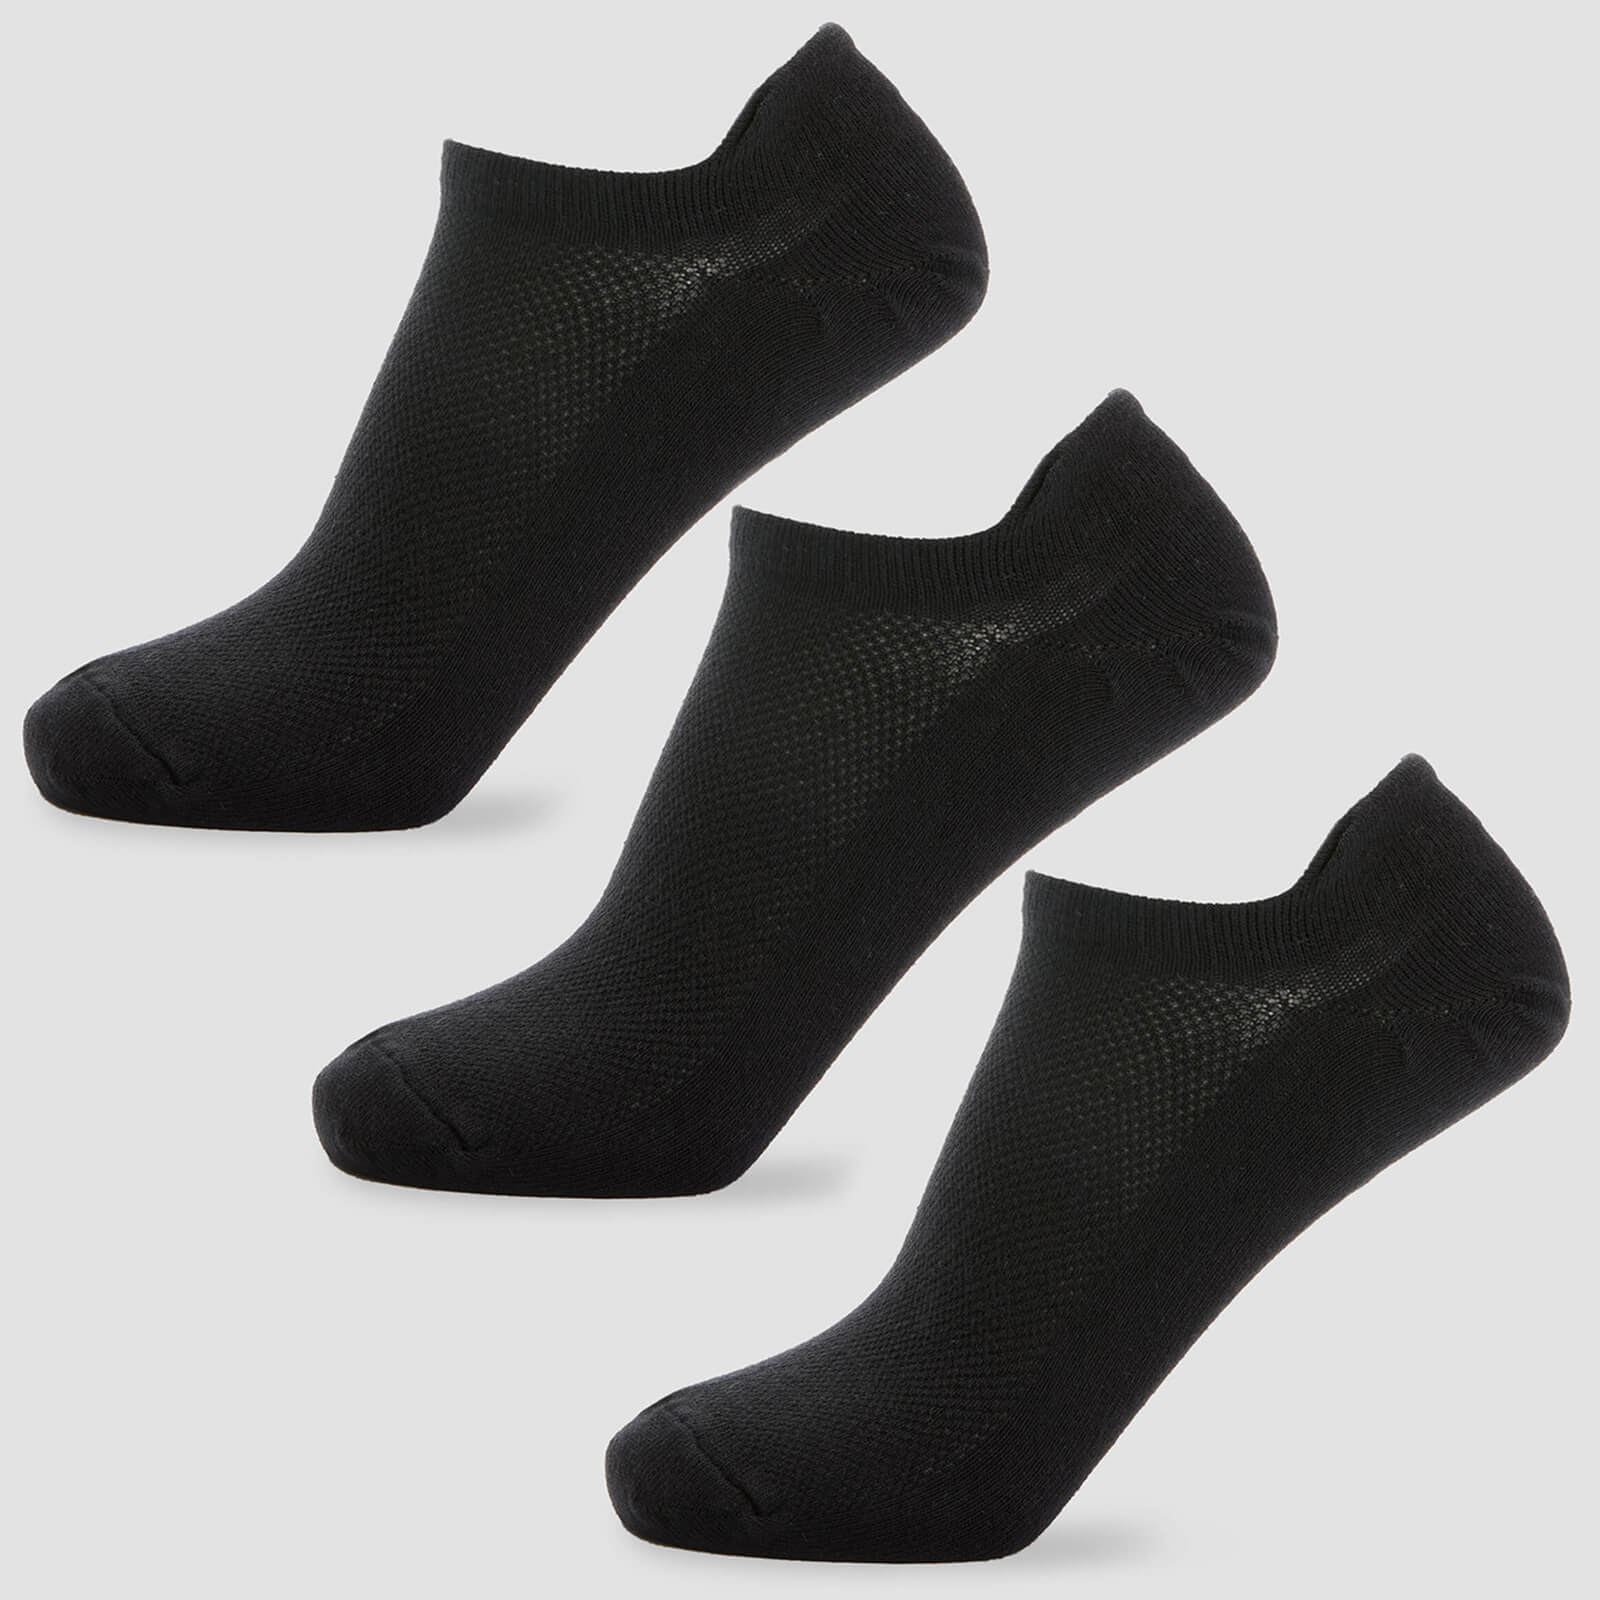 Muške čarape do gležnja - Crne (3 para) - UK 6-8